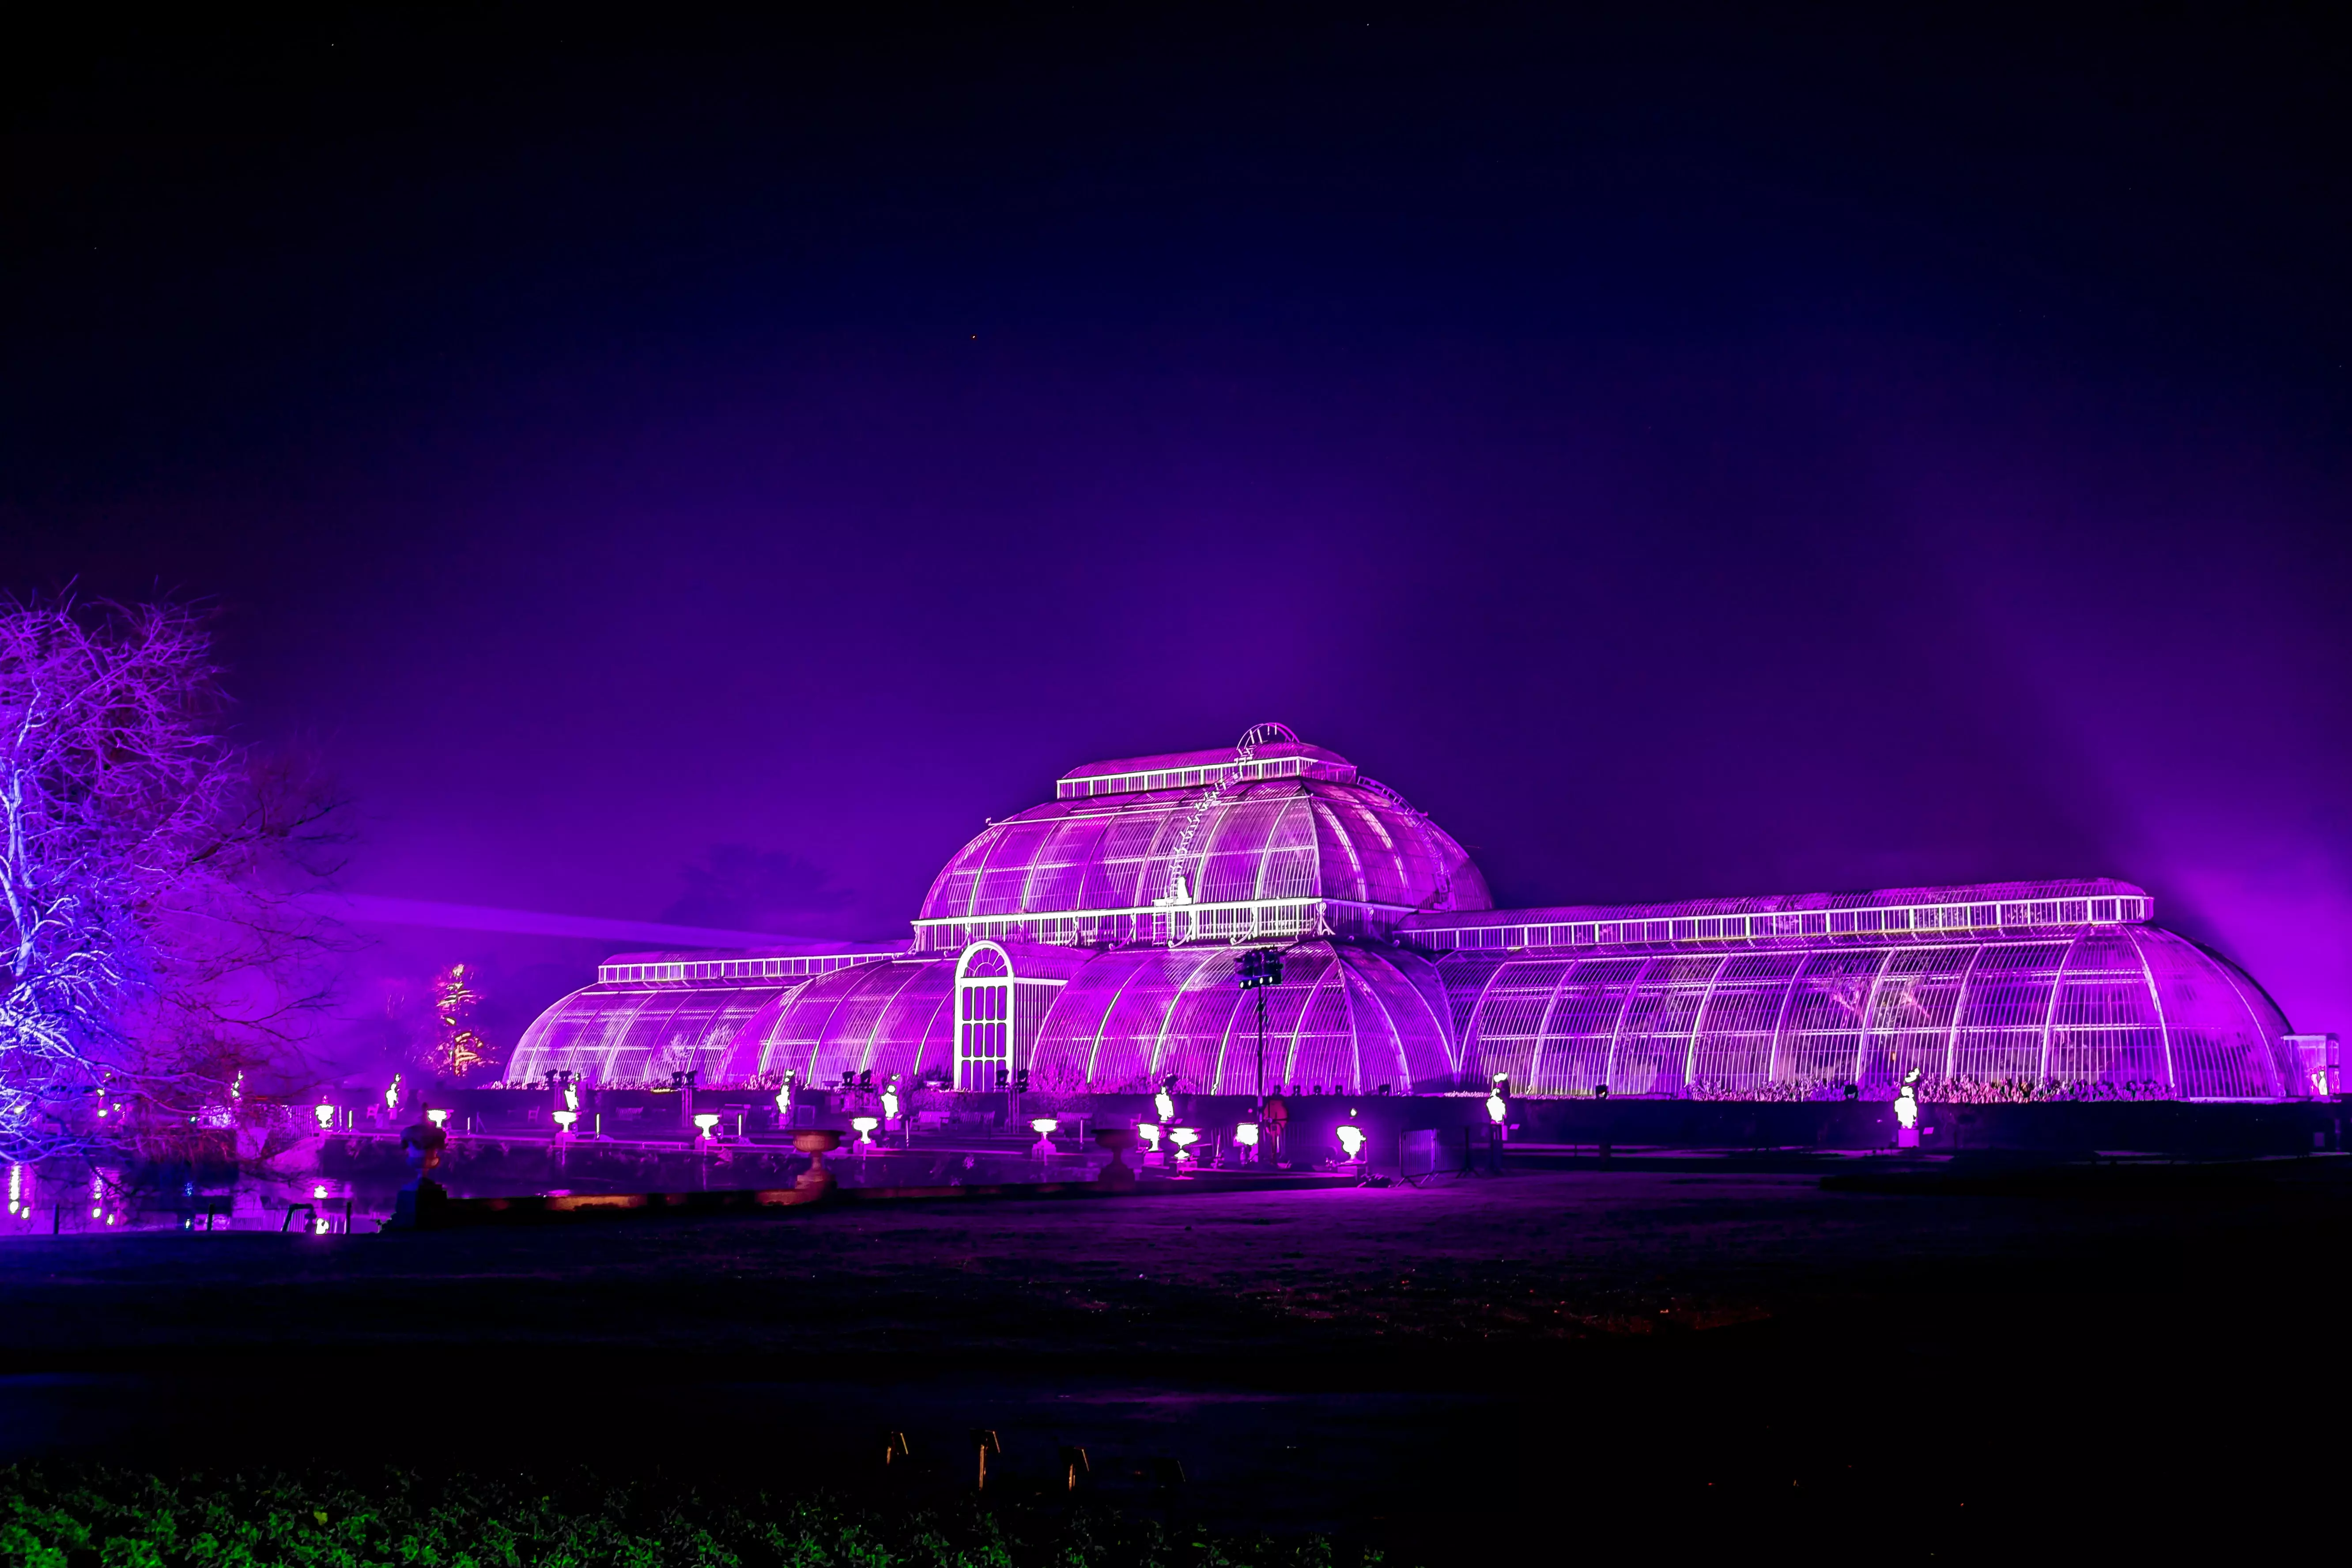 Kew Gardens lit up at Christmas